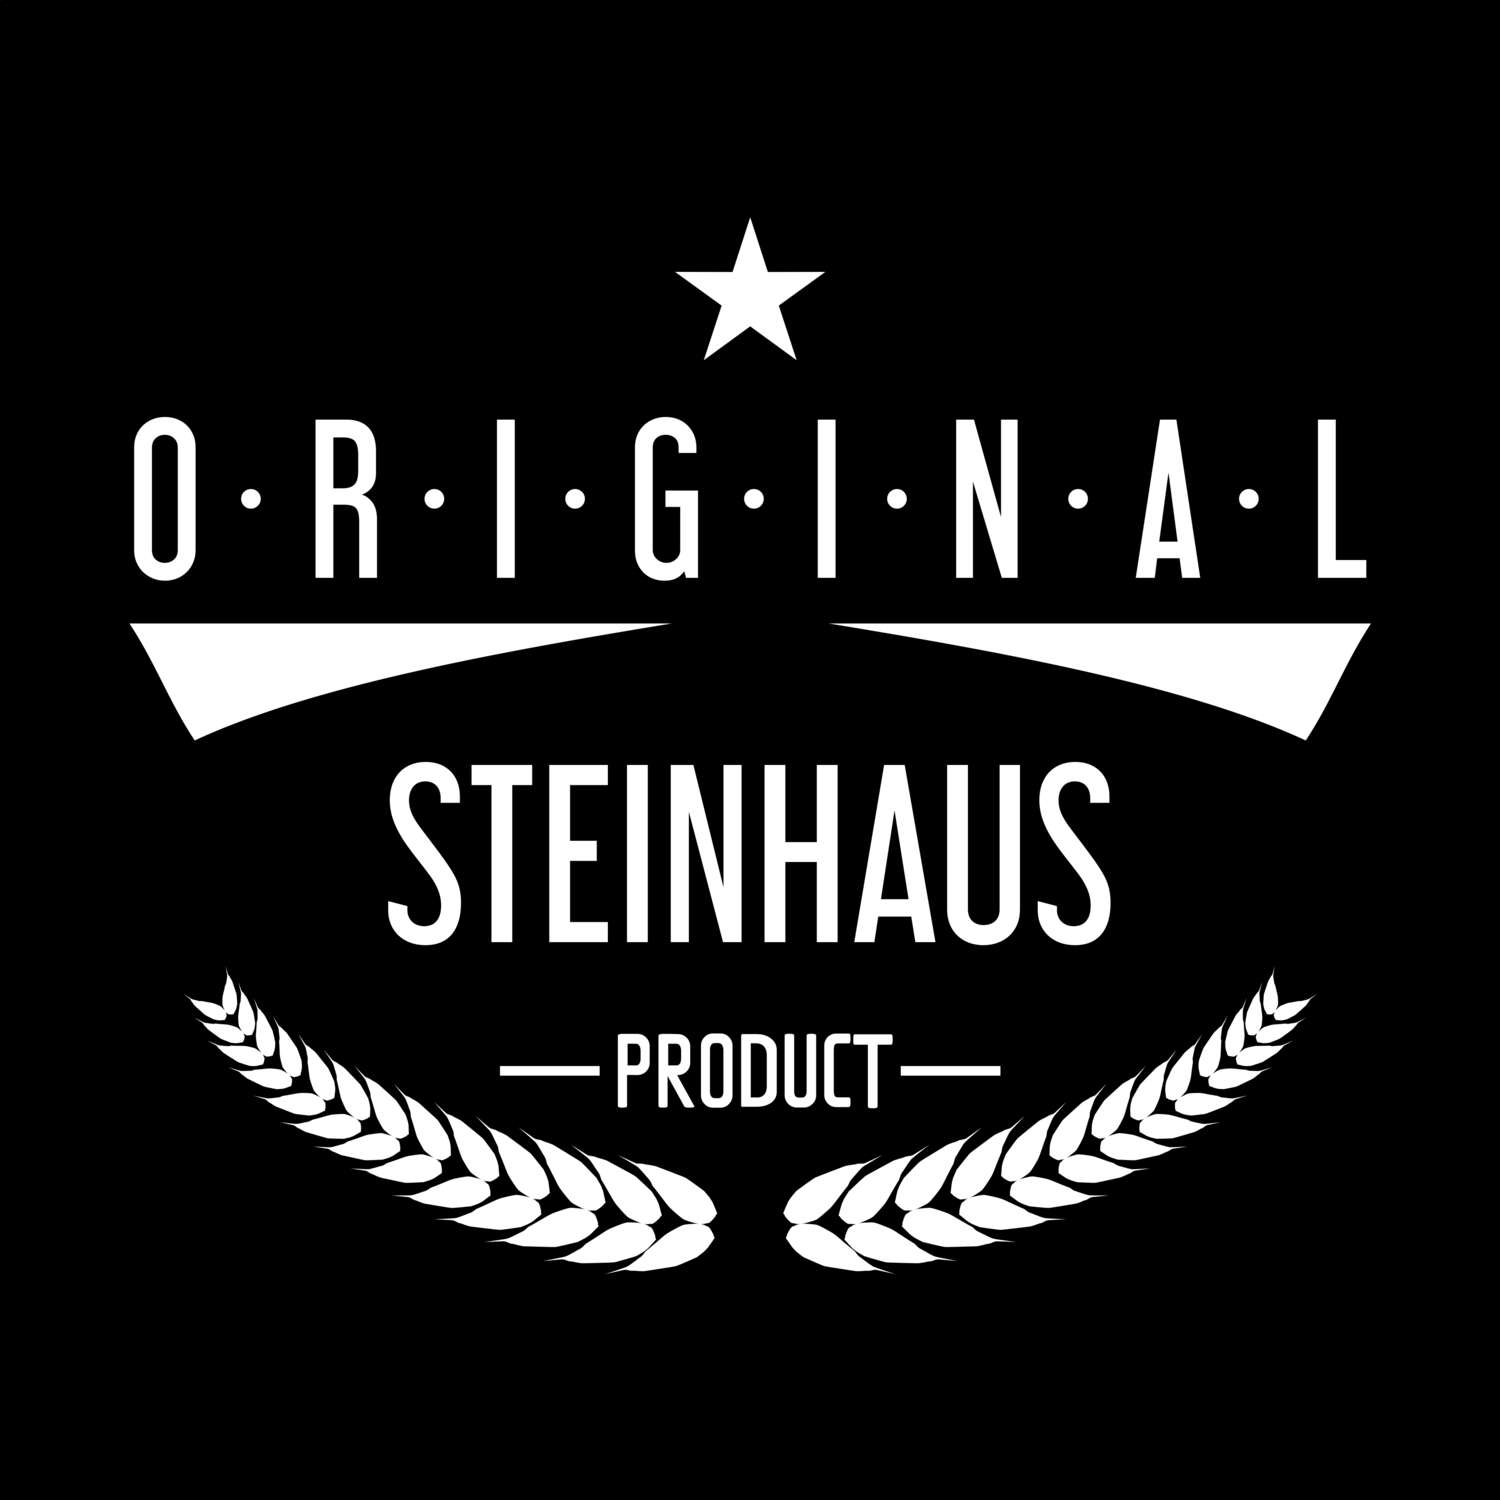 Steinhaus T-Shirt »Original Product«